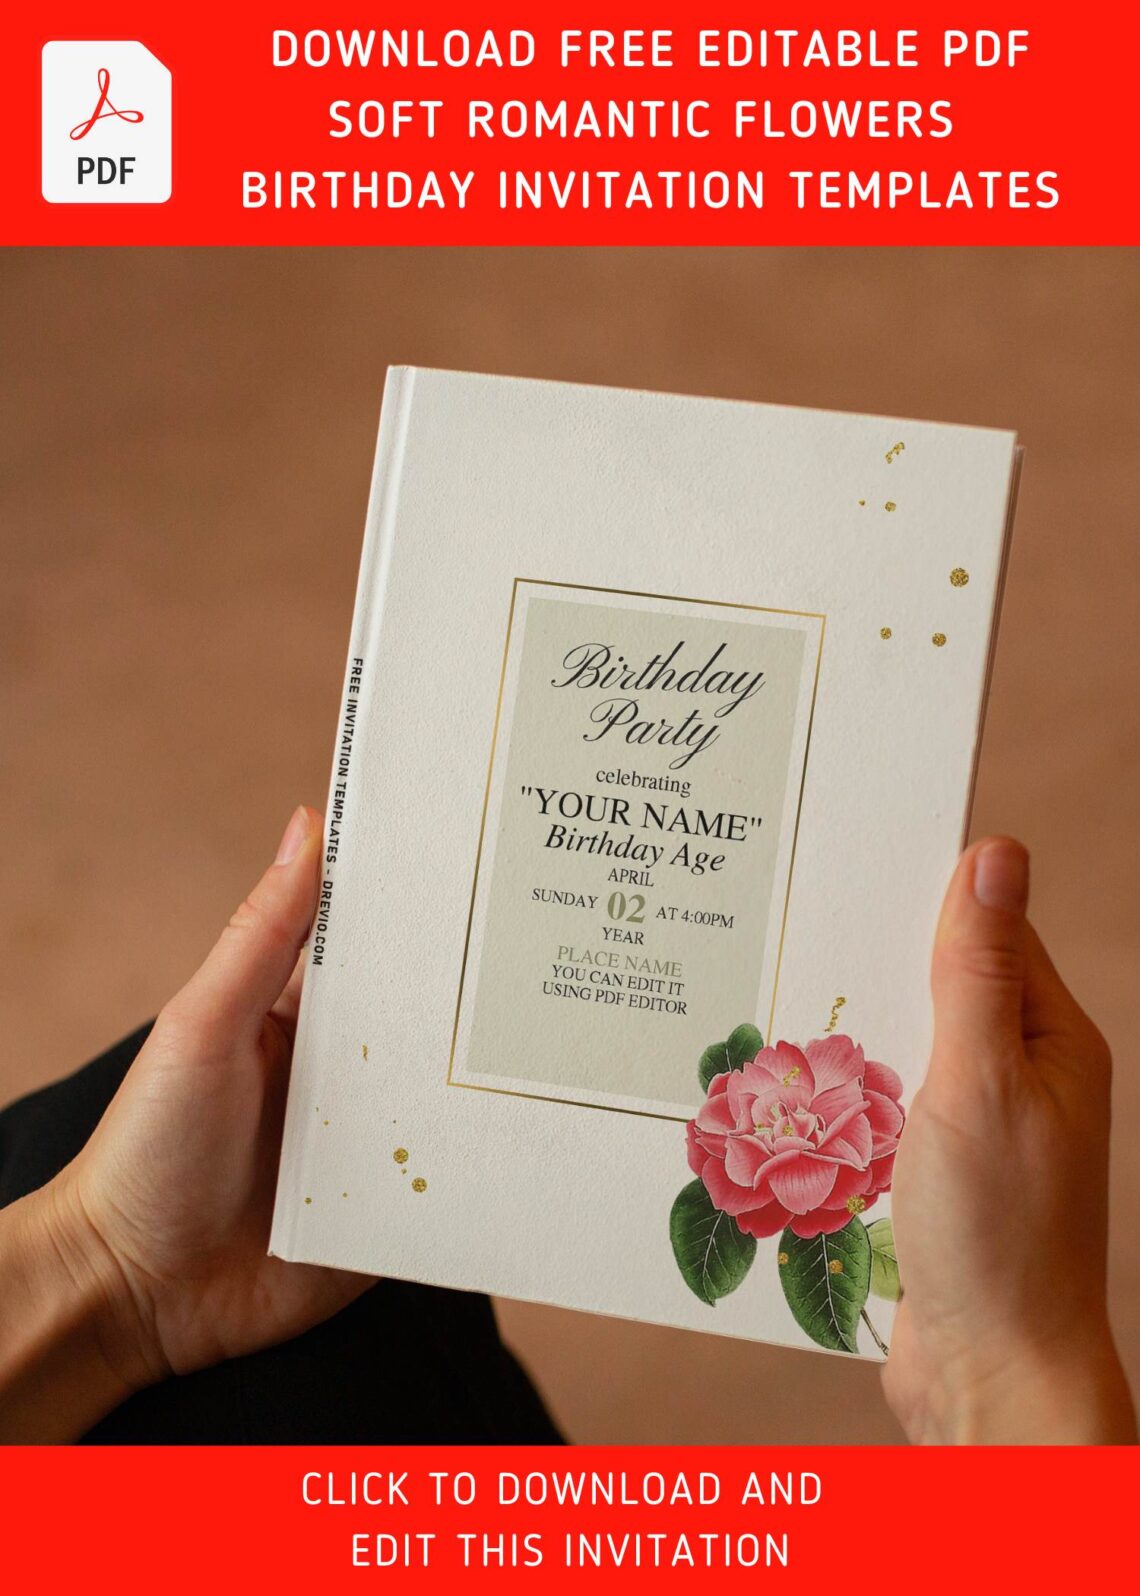 (Free Editable PDF) Sweet Romantic Camellia Minimalist Birthday Invitation Templates with lovely pink camellia flowers